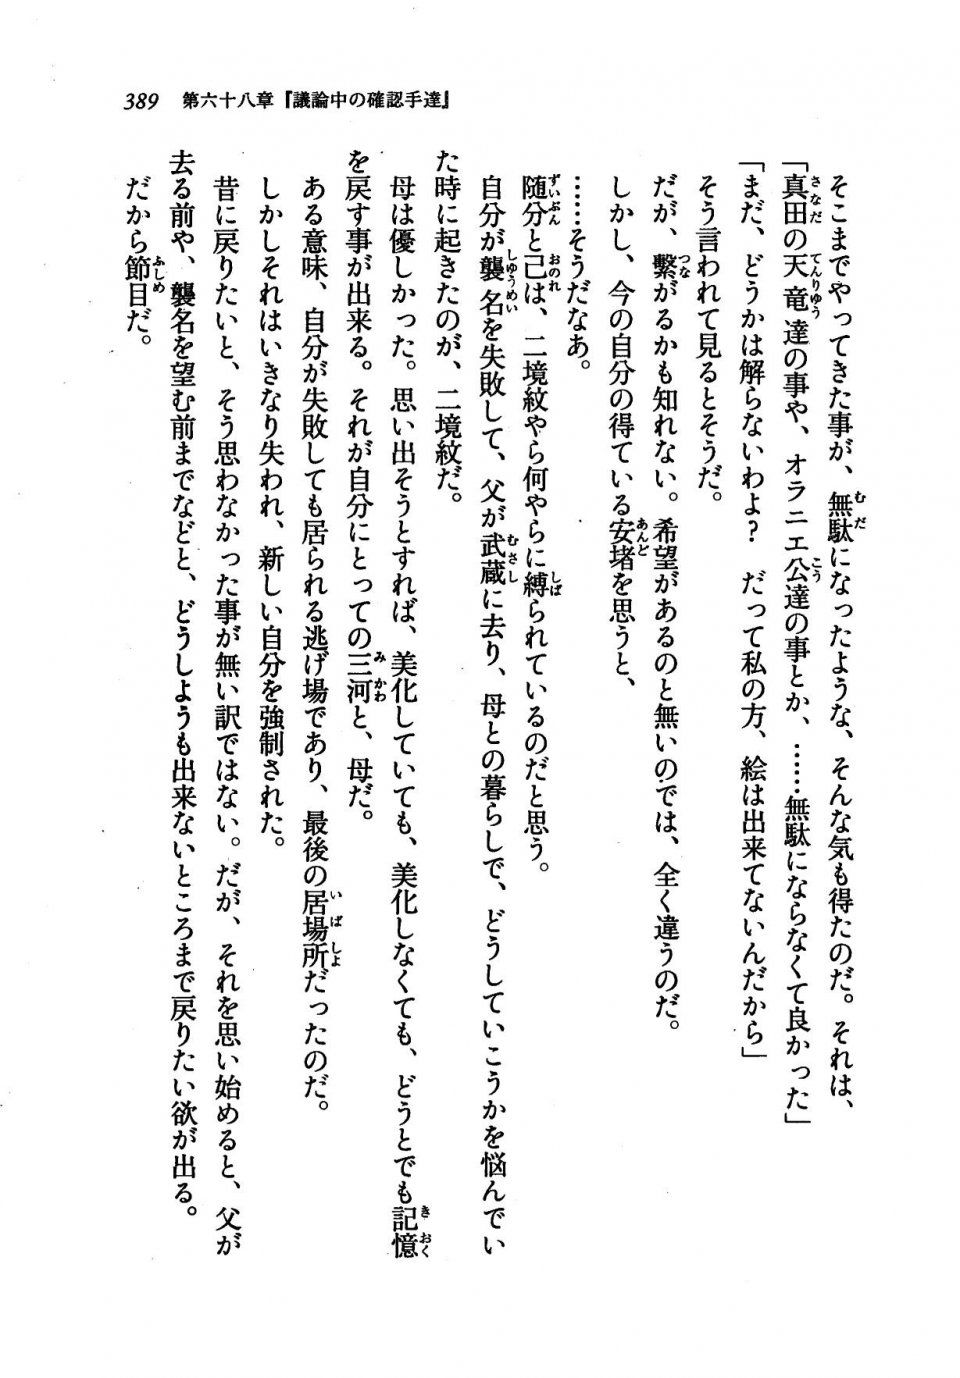 Kyoukai Senjou no Horizon LN Vol 21(8C) Part 1 - Photo #388